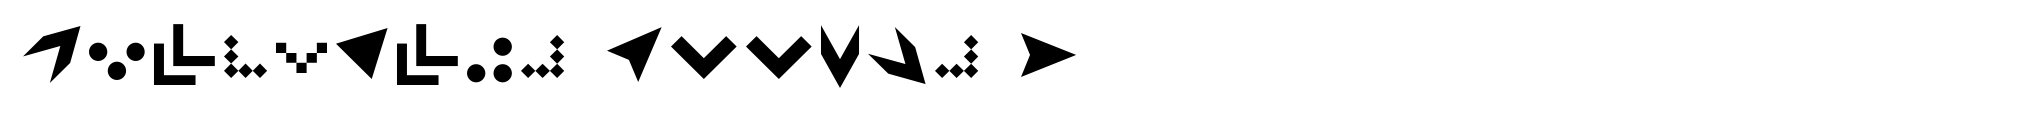 ClickBits Arrows 2 image